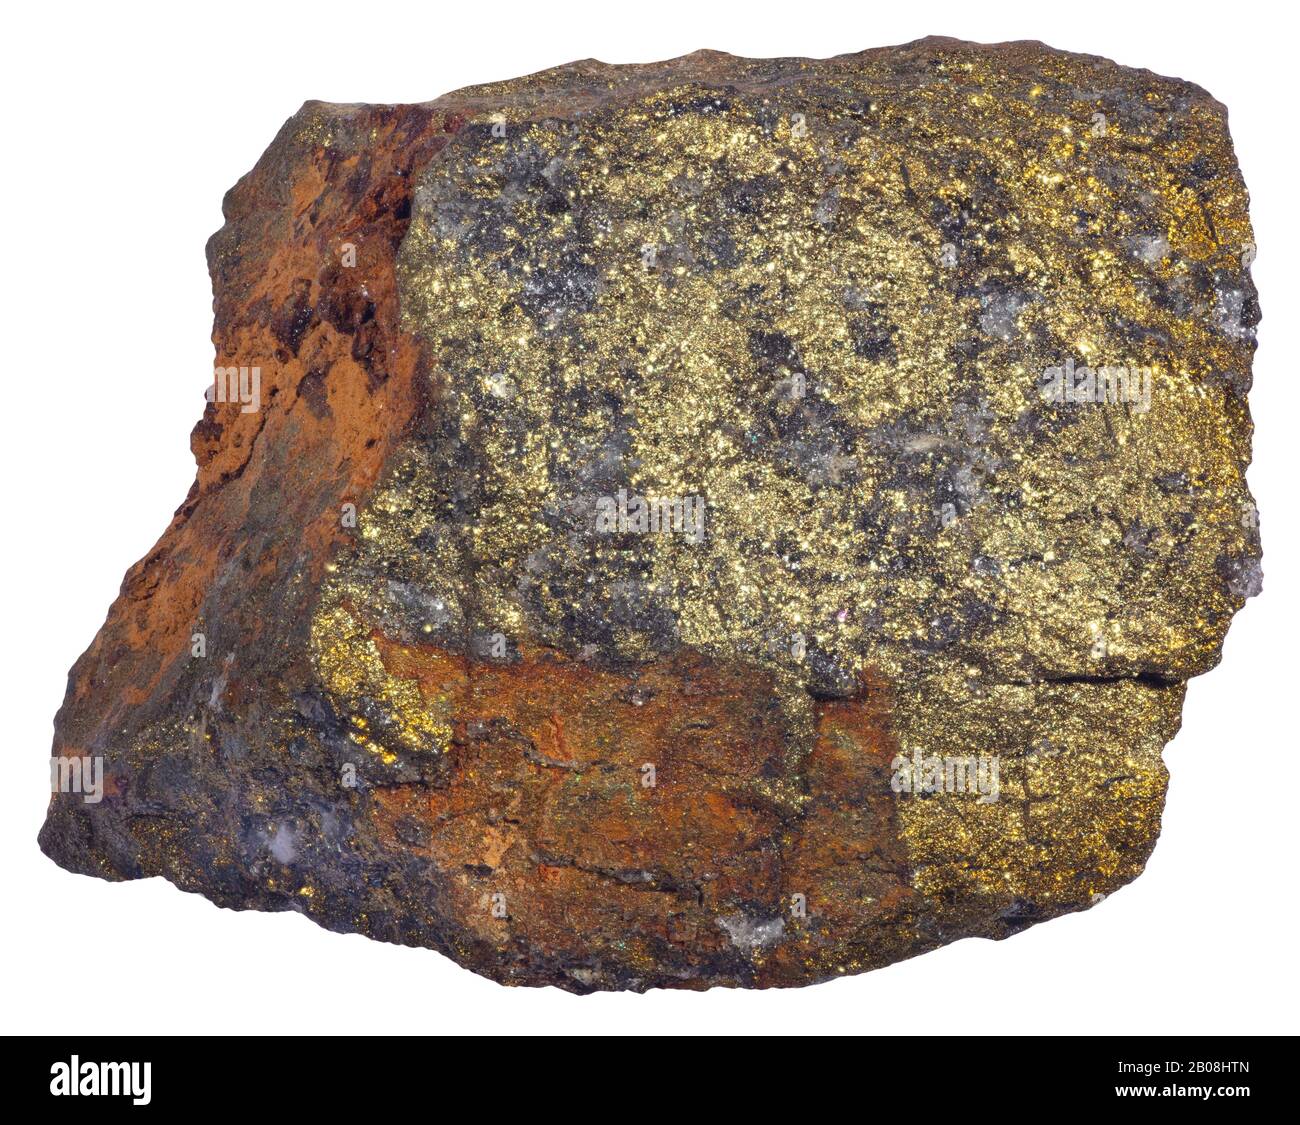 Pentlandite, Sudbury (Ontario) Le Pentlandite est un minéral jaune bronze composé d'un sulfure de fer et de nickel et qui est le principal minerai de nickel Banque D'Images